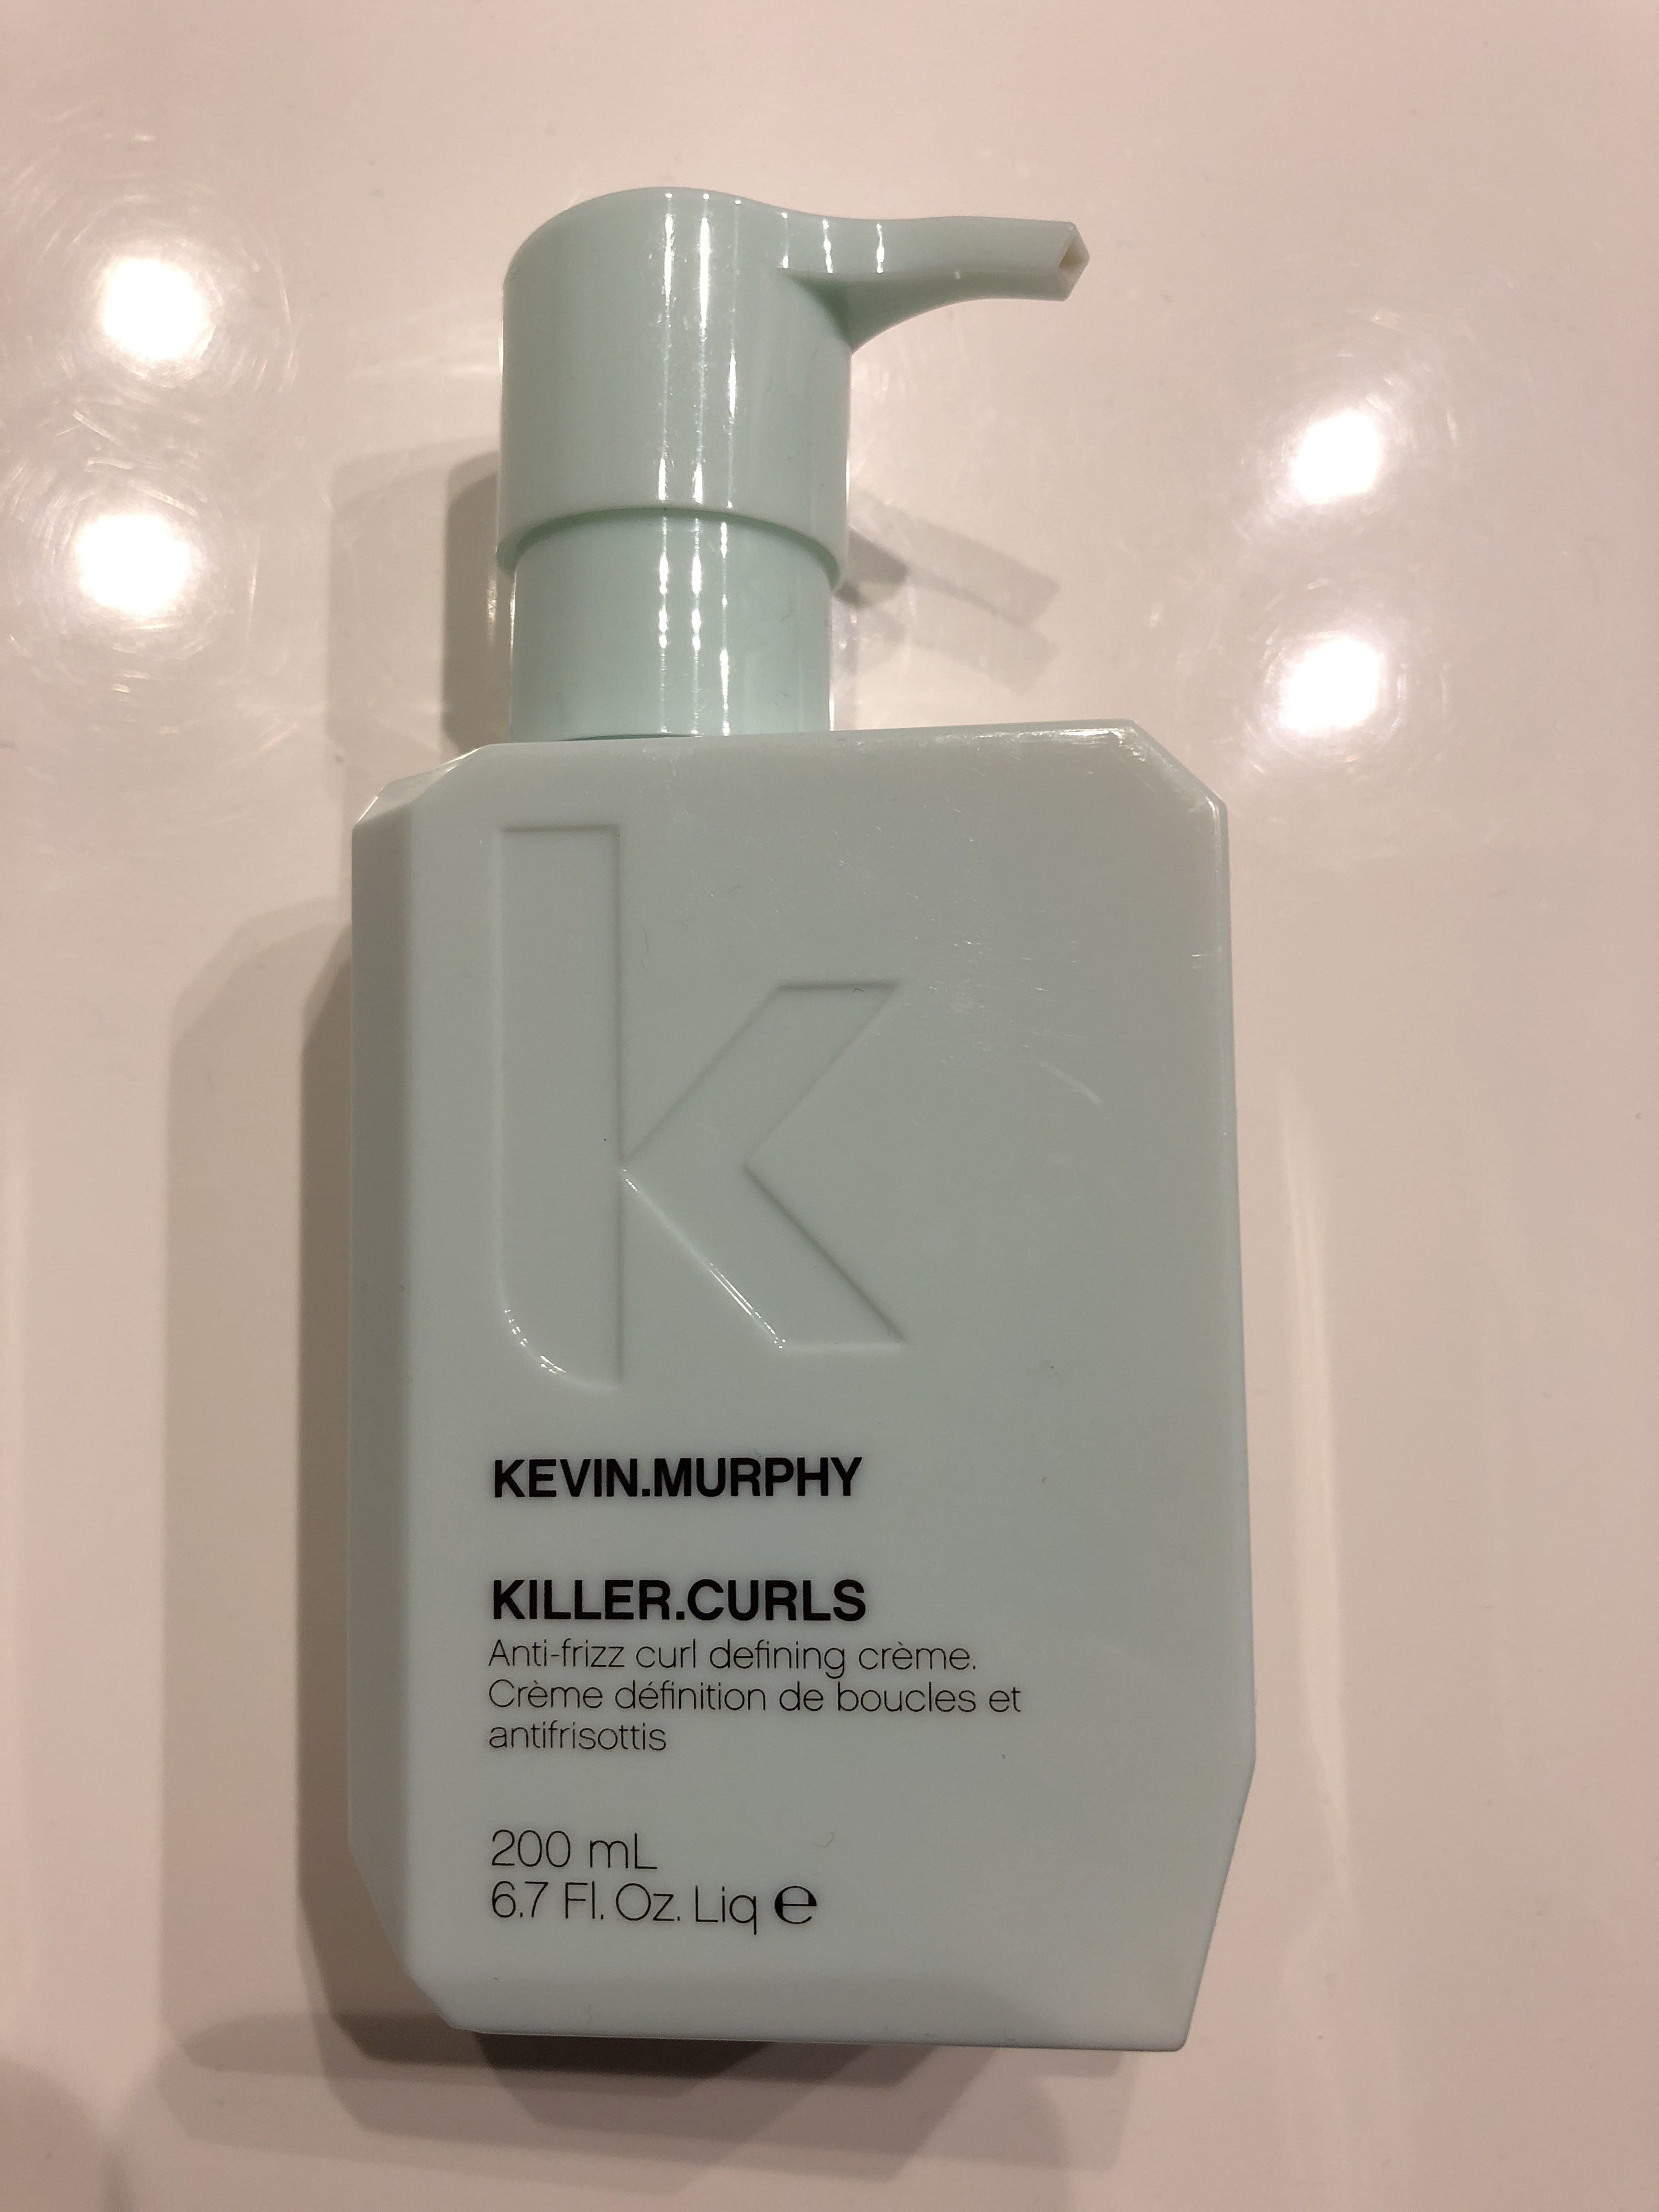 Killer Curls - Product - fr